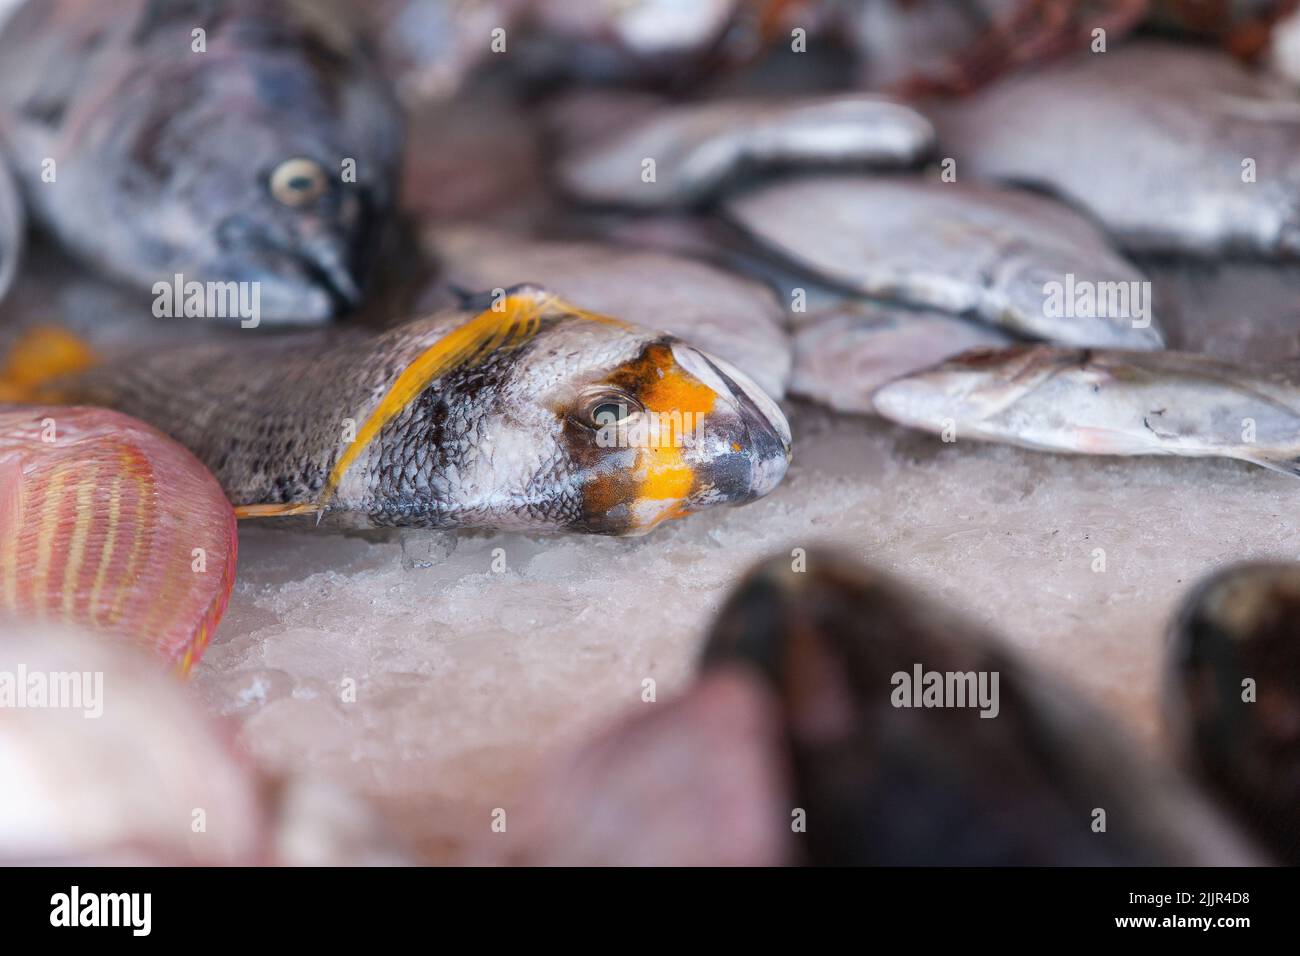 Orange tail fish displayed on the fish market on the ice cubes, Arabian Gulf, United Arab Emirates Stock Photo